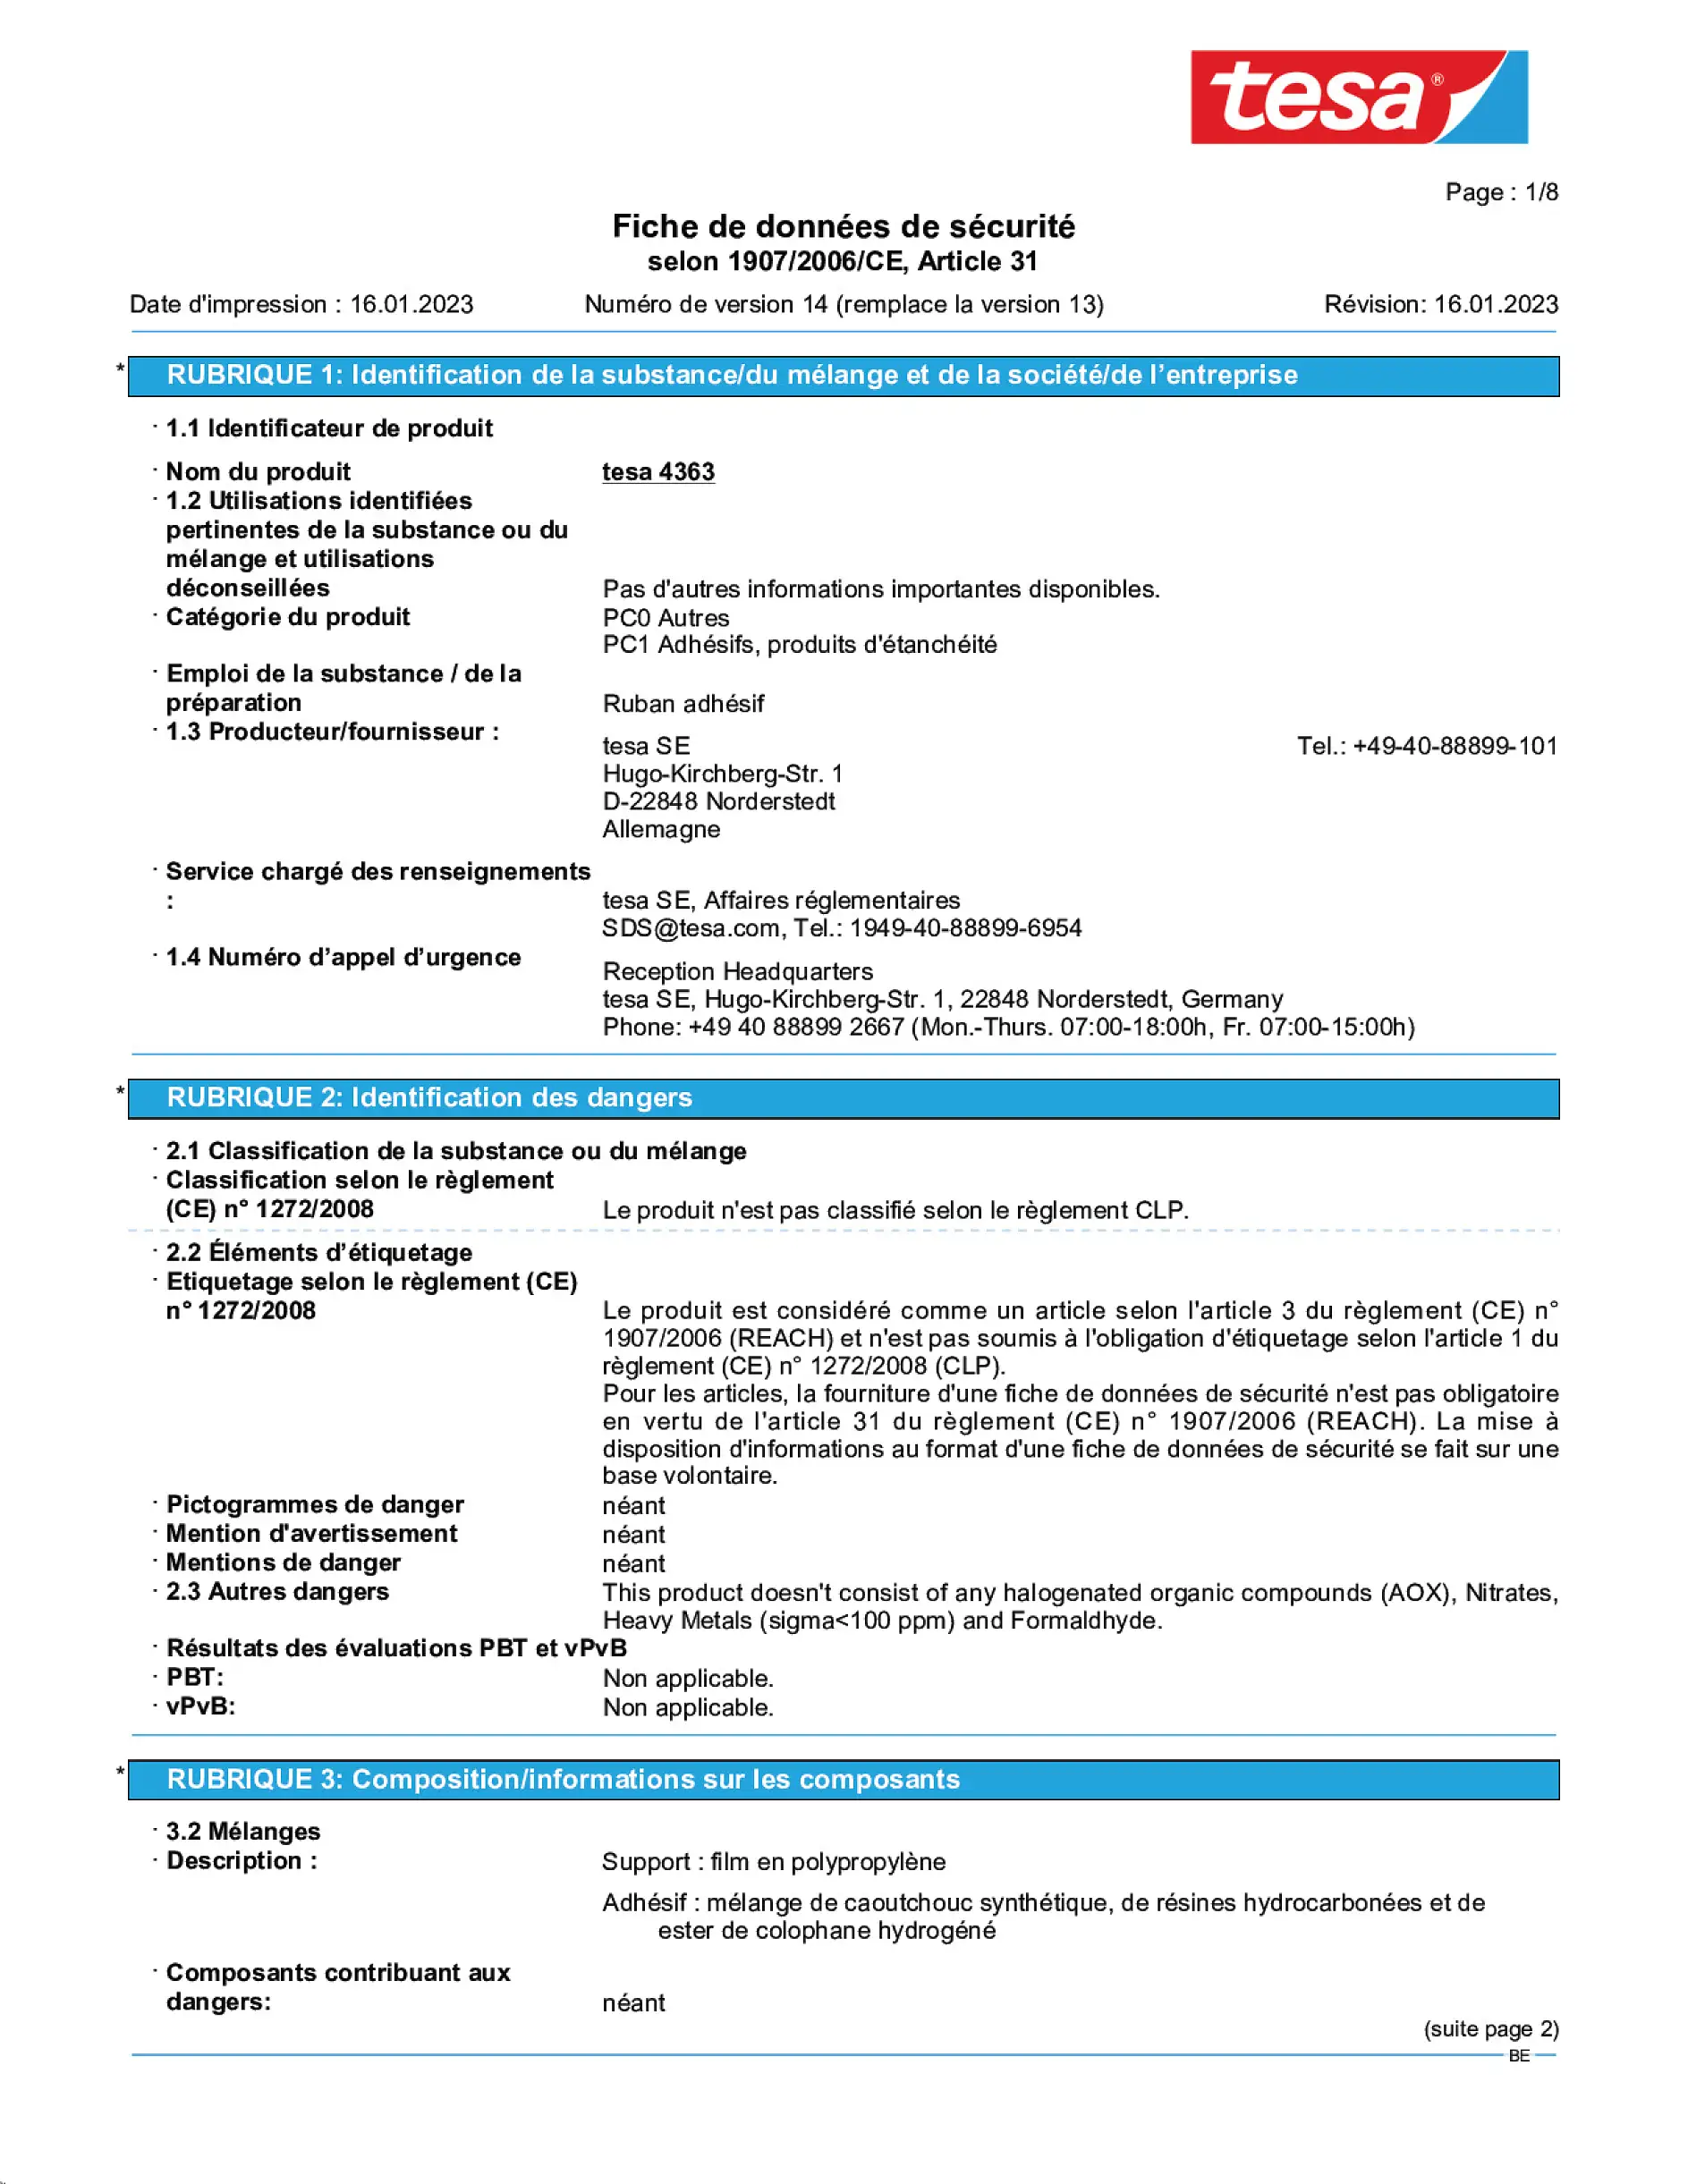 Safety data sheet_tesa® Professional 04363_nl-BE_v14